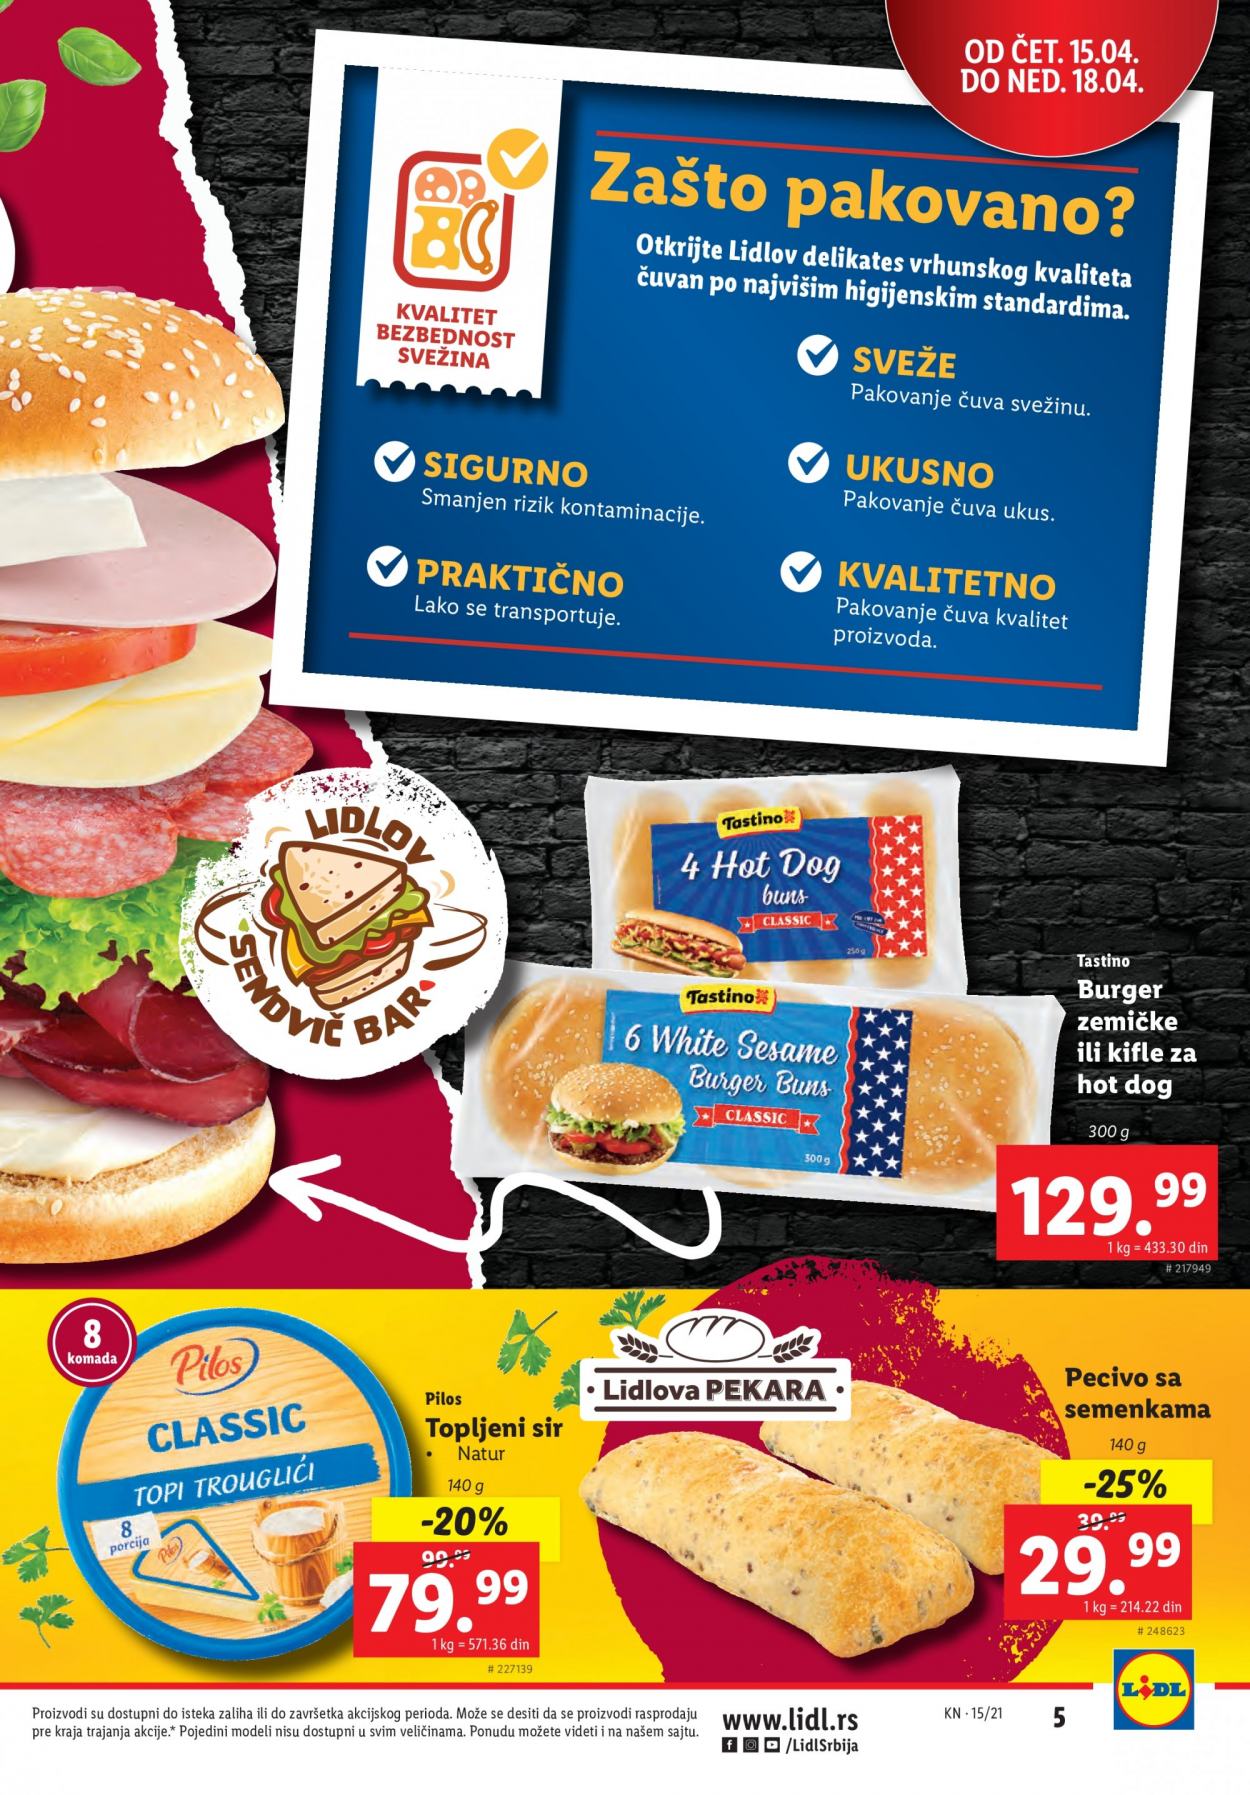 thumbnail - Lidl katalog - 15.04.2021 - 21.04.2021 - Proizvodi na akciji - kifle za hot dog, burger zemičke, pecivo, Pilos, topljeni sir, Tastino. Stranica 5.